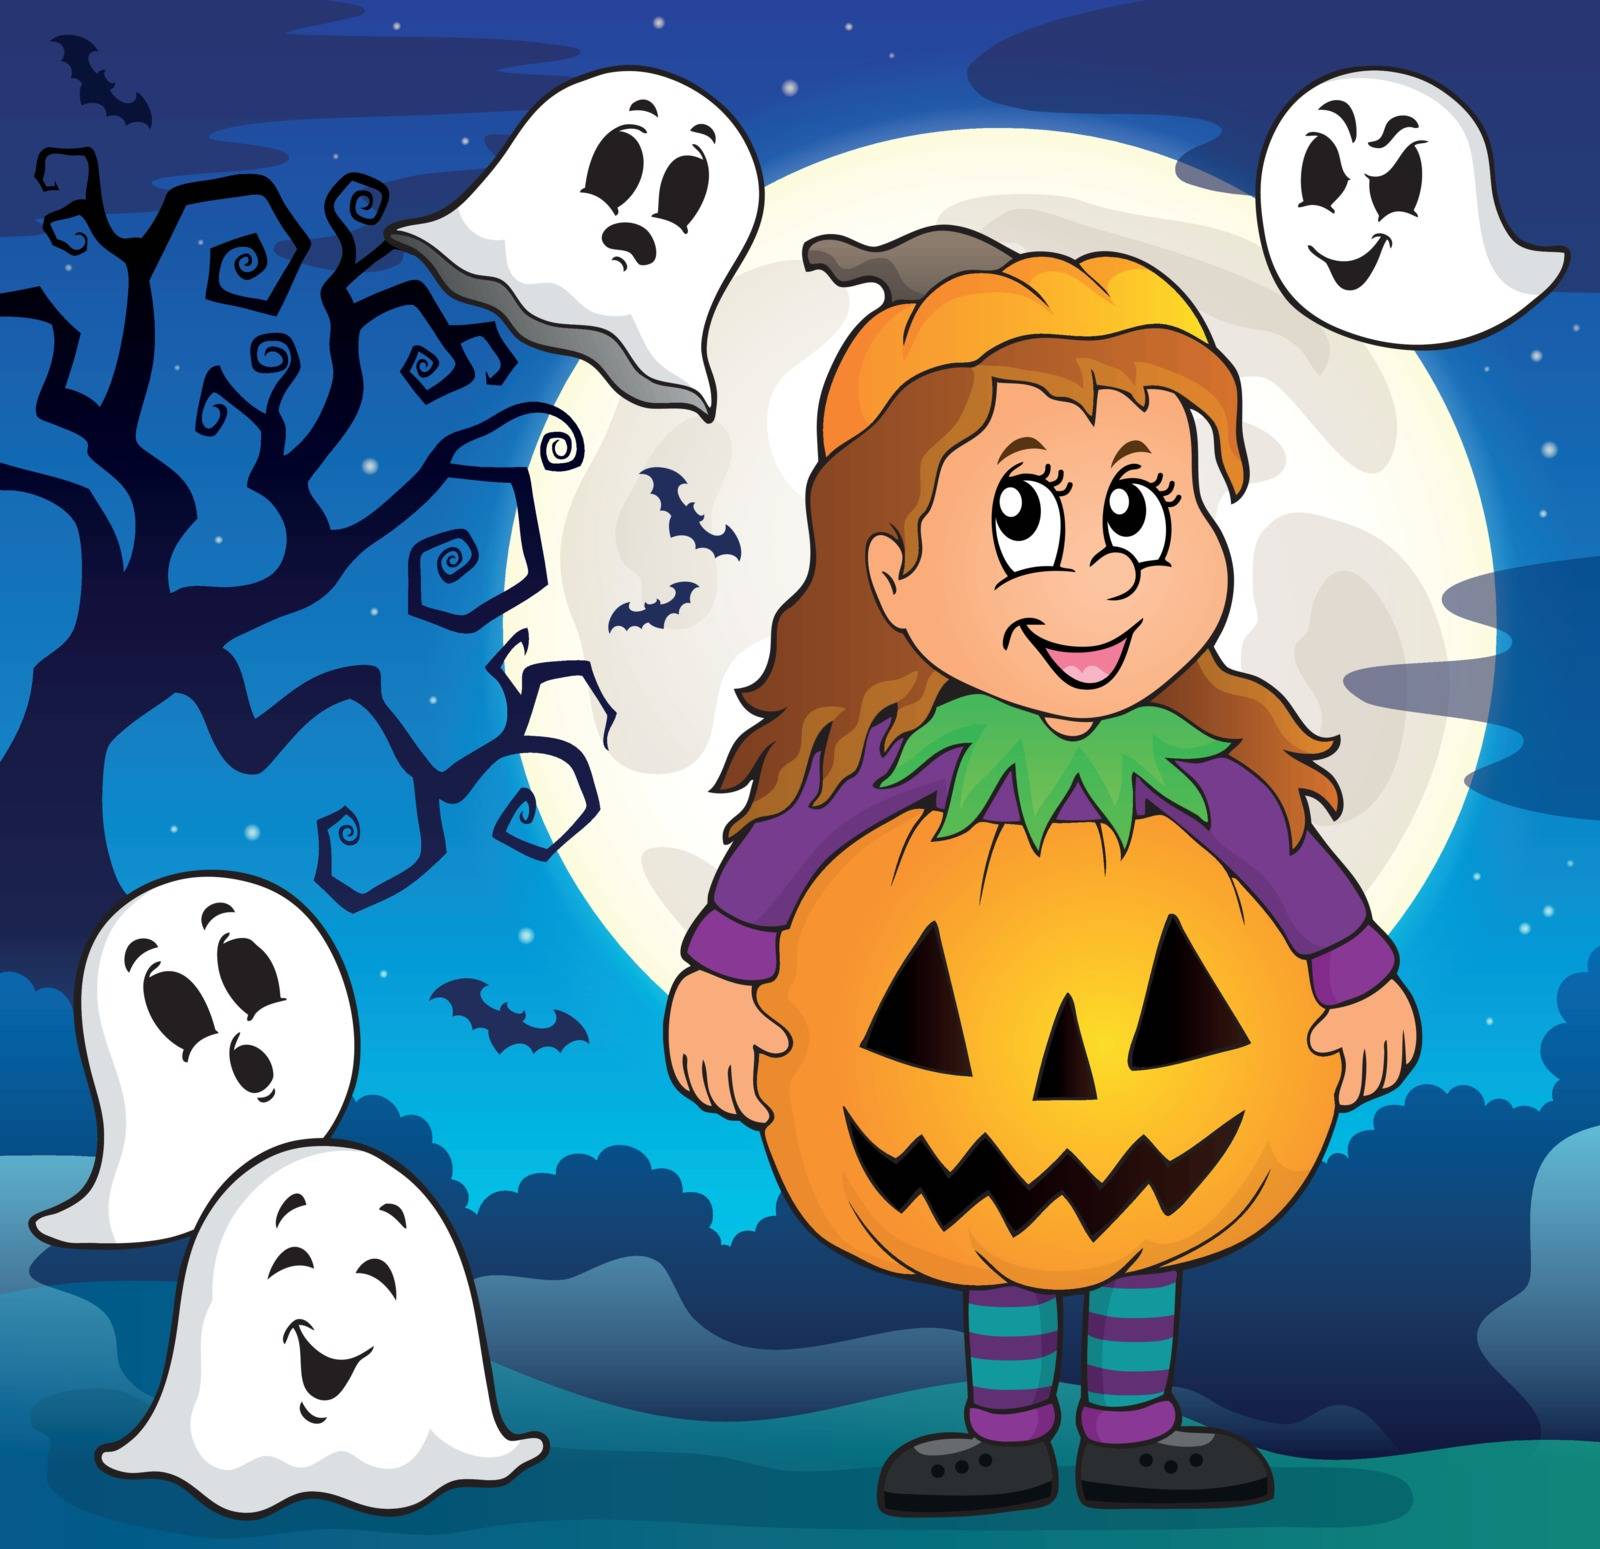 Girl in Halloween costume theme image 3 - eps10 vector illustration.